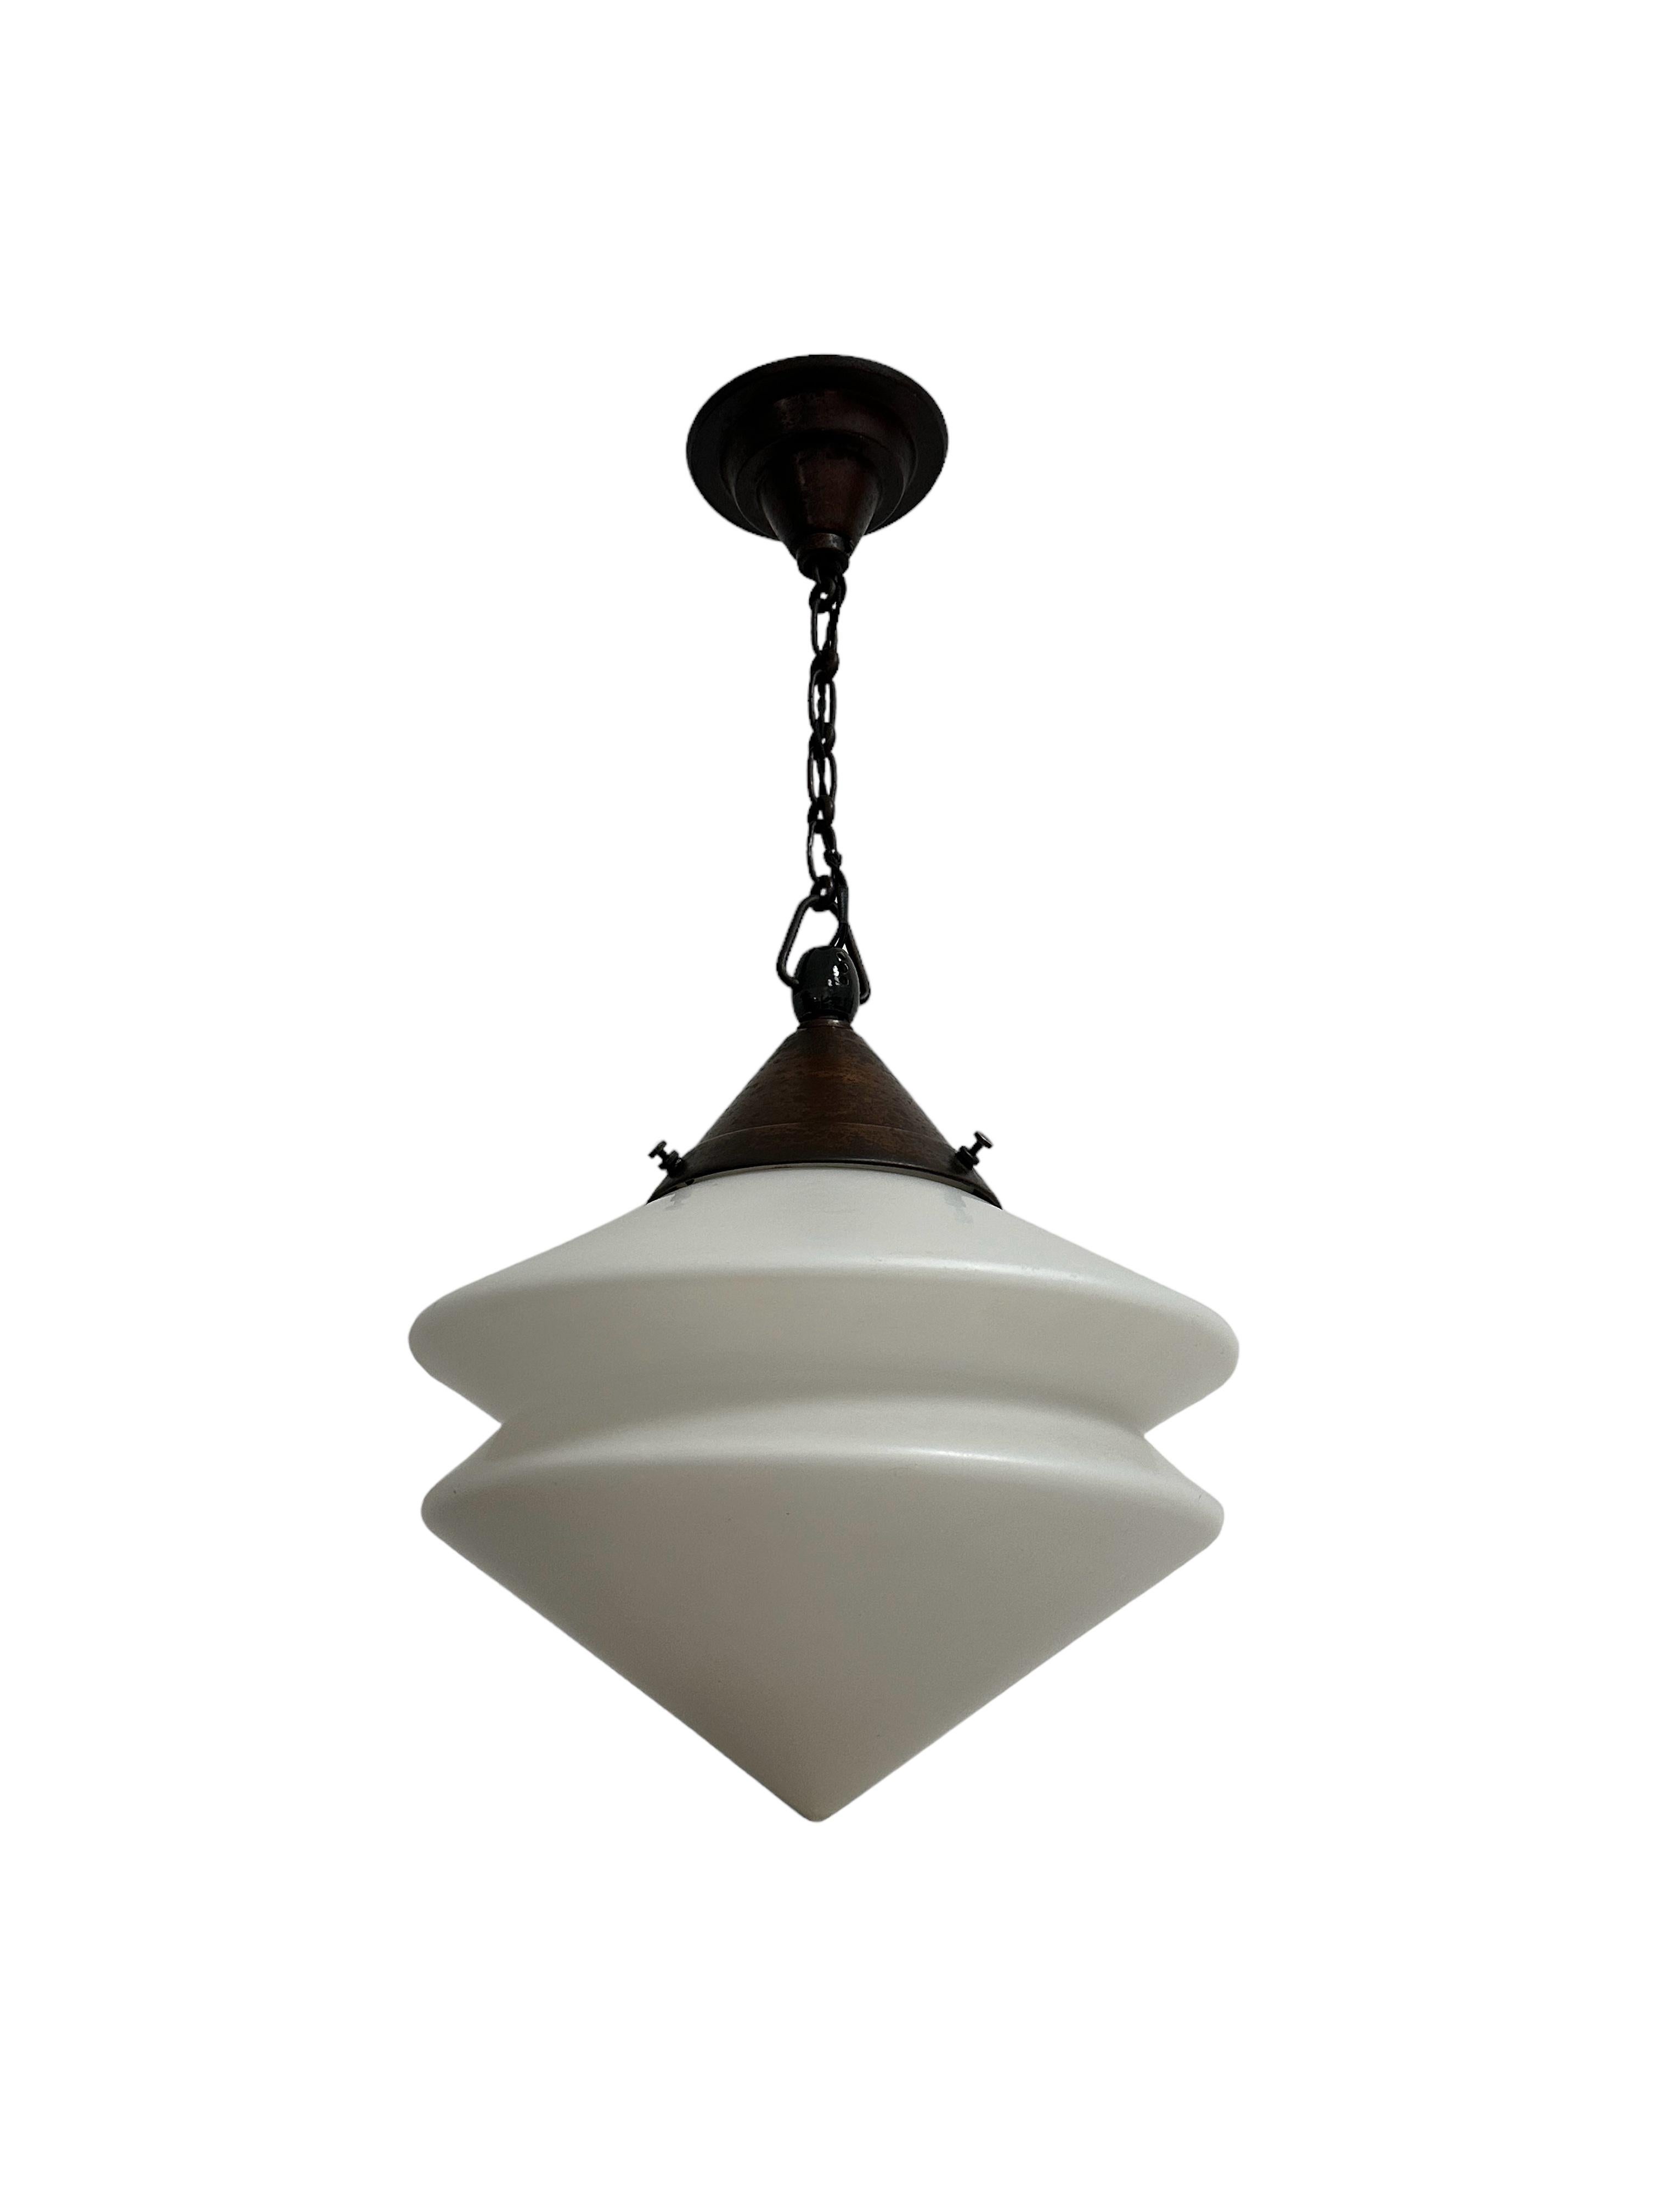 Antique Bauhaus Kandem Opaline Ceiling Pendant Light Lamp By Körting & Mathiesen For Sale 1